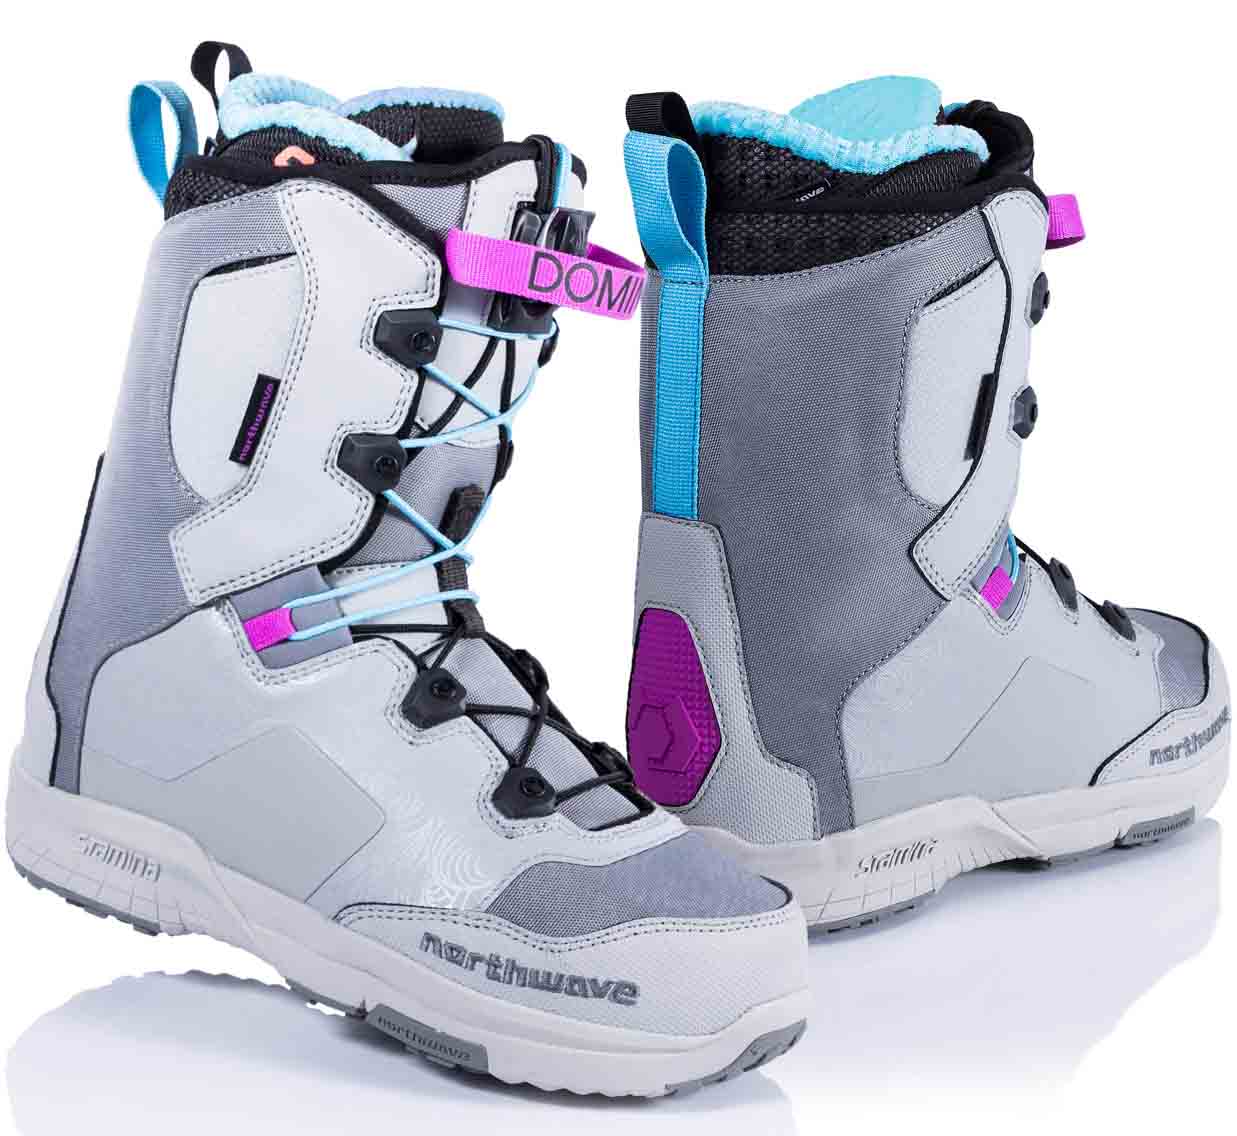 Northwave Domino SL Women's Snowboard Boots